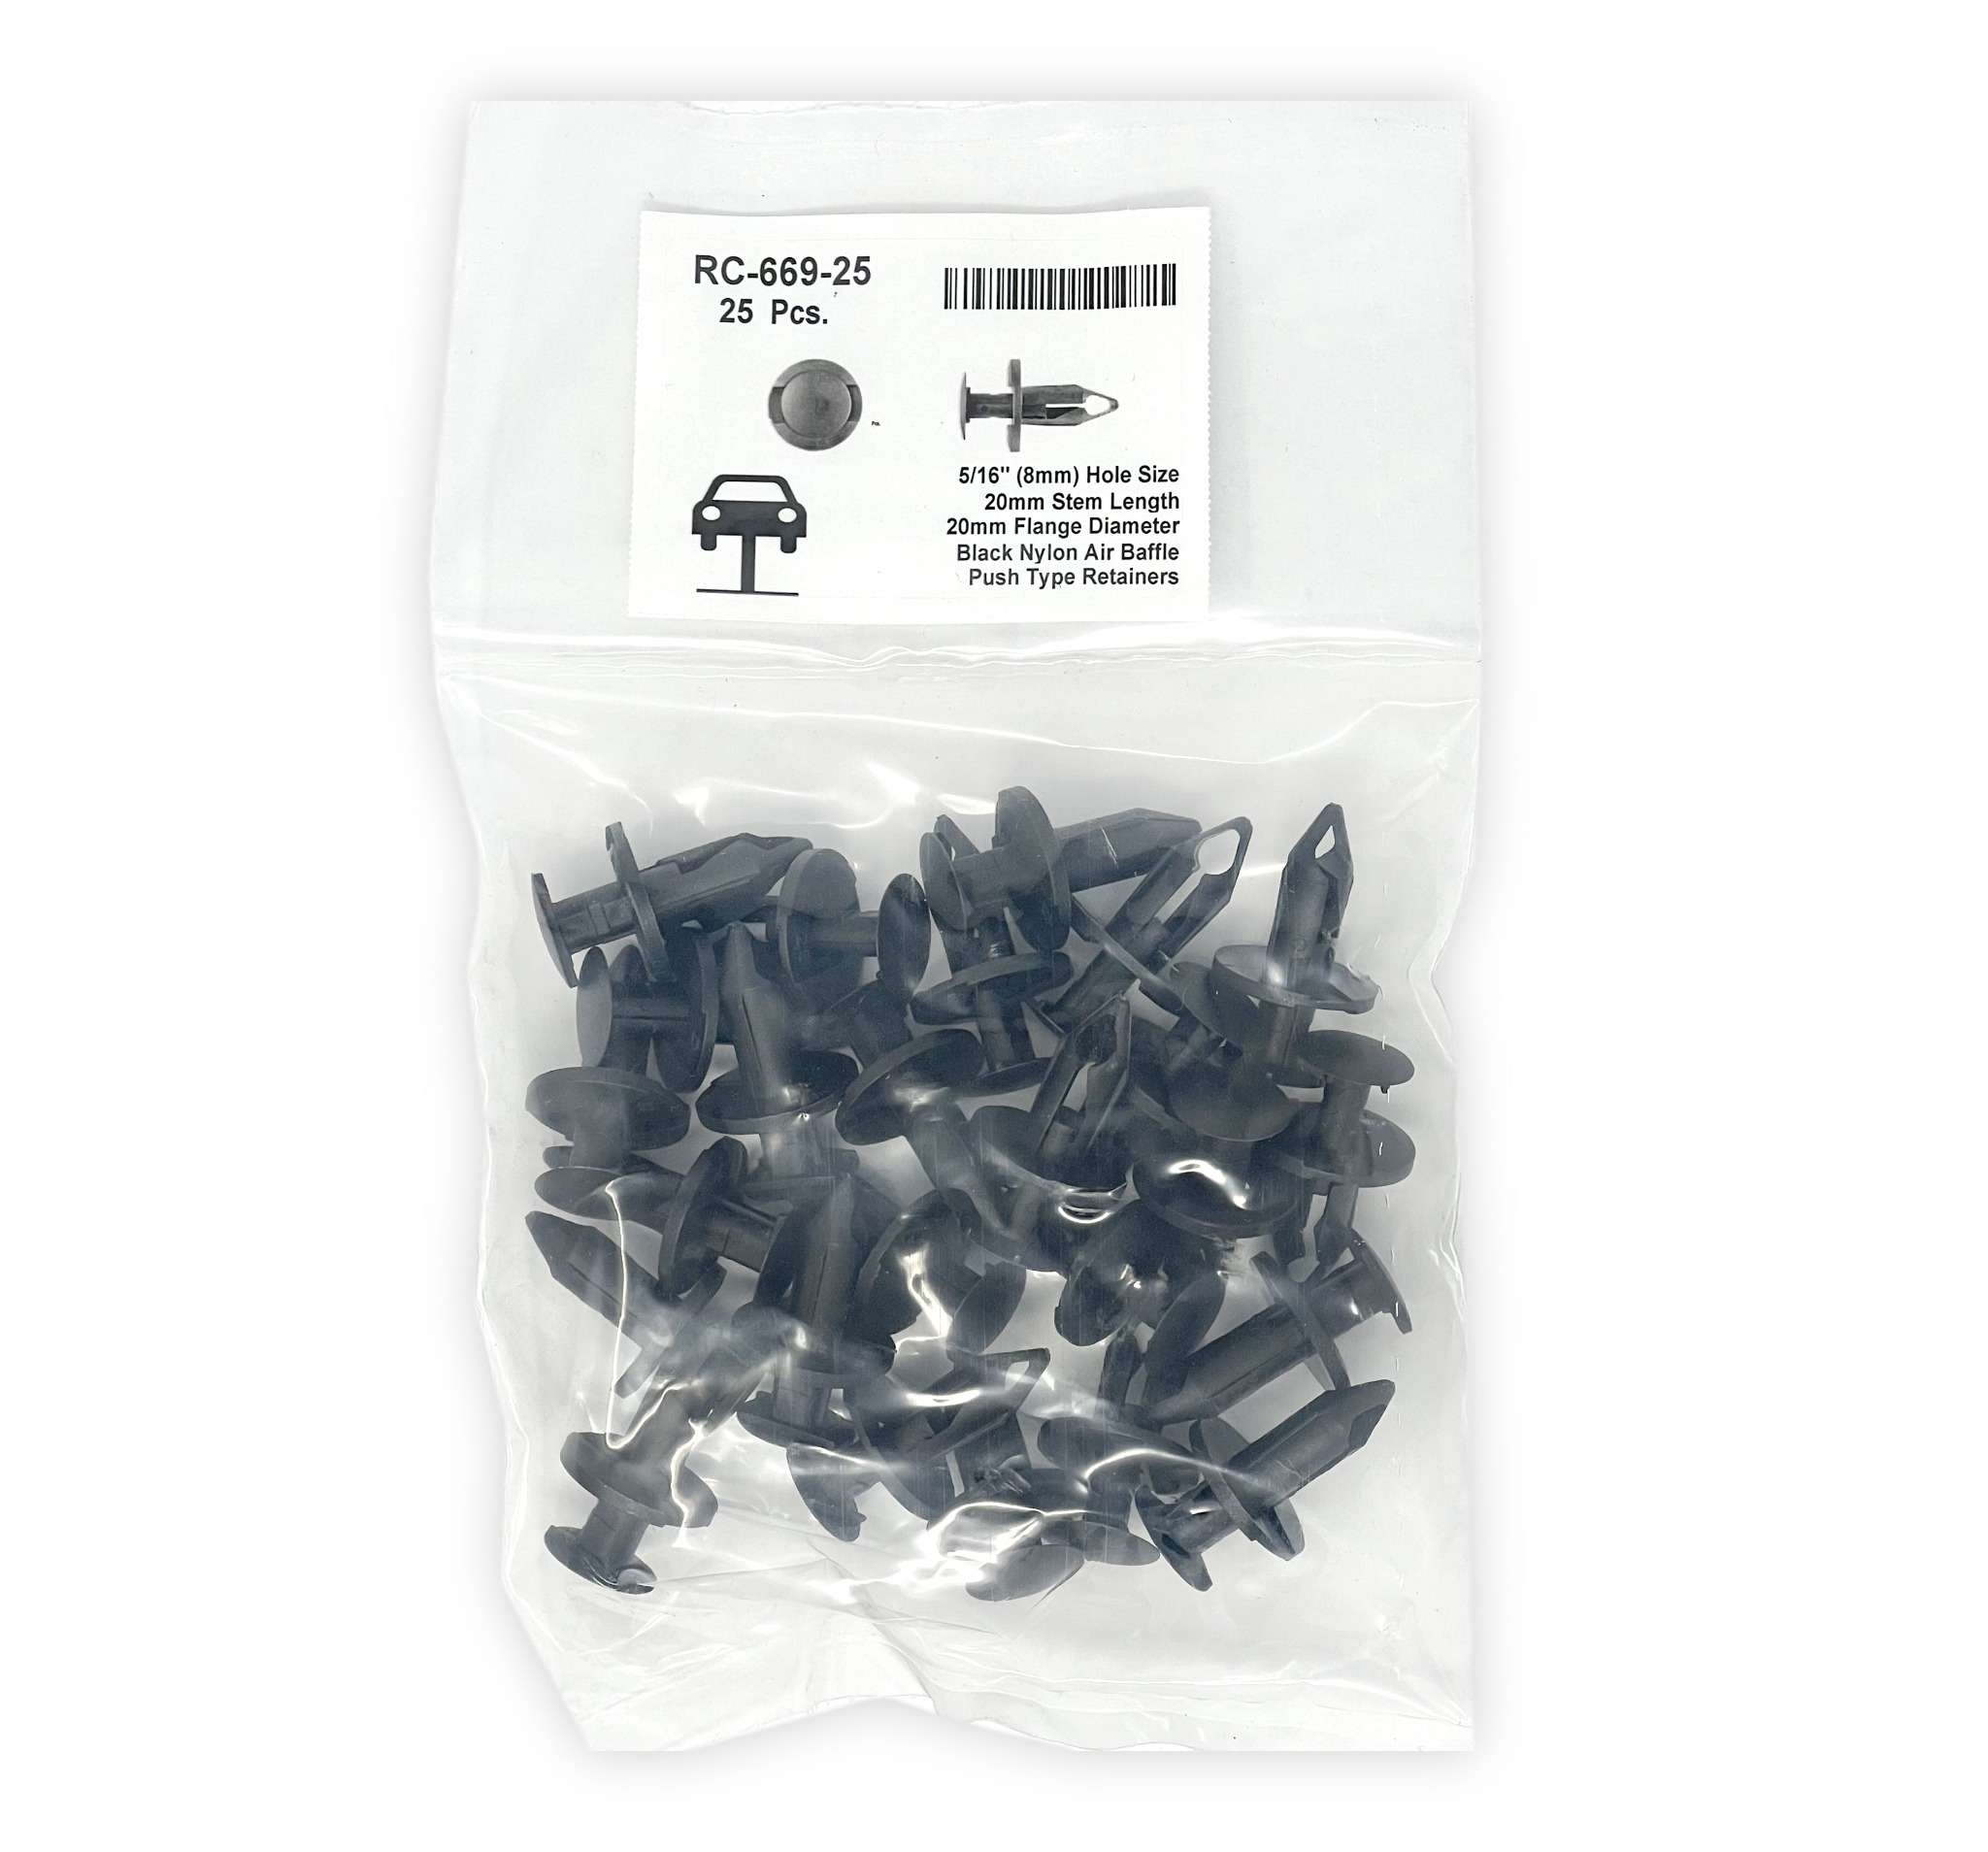 Black Nylon Push Type Retainer Head Diameter 20mm, Stem Length 20mm, Fits Into 8mm Hole (Pack of 25)